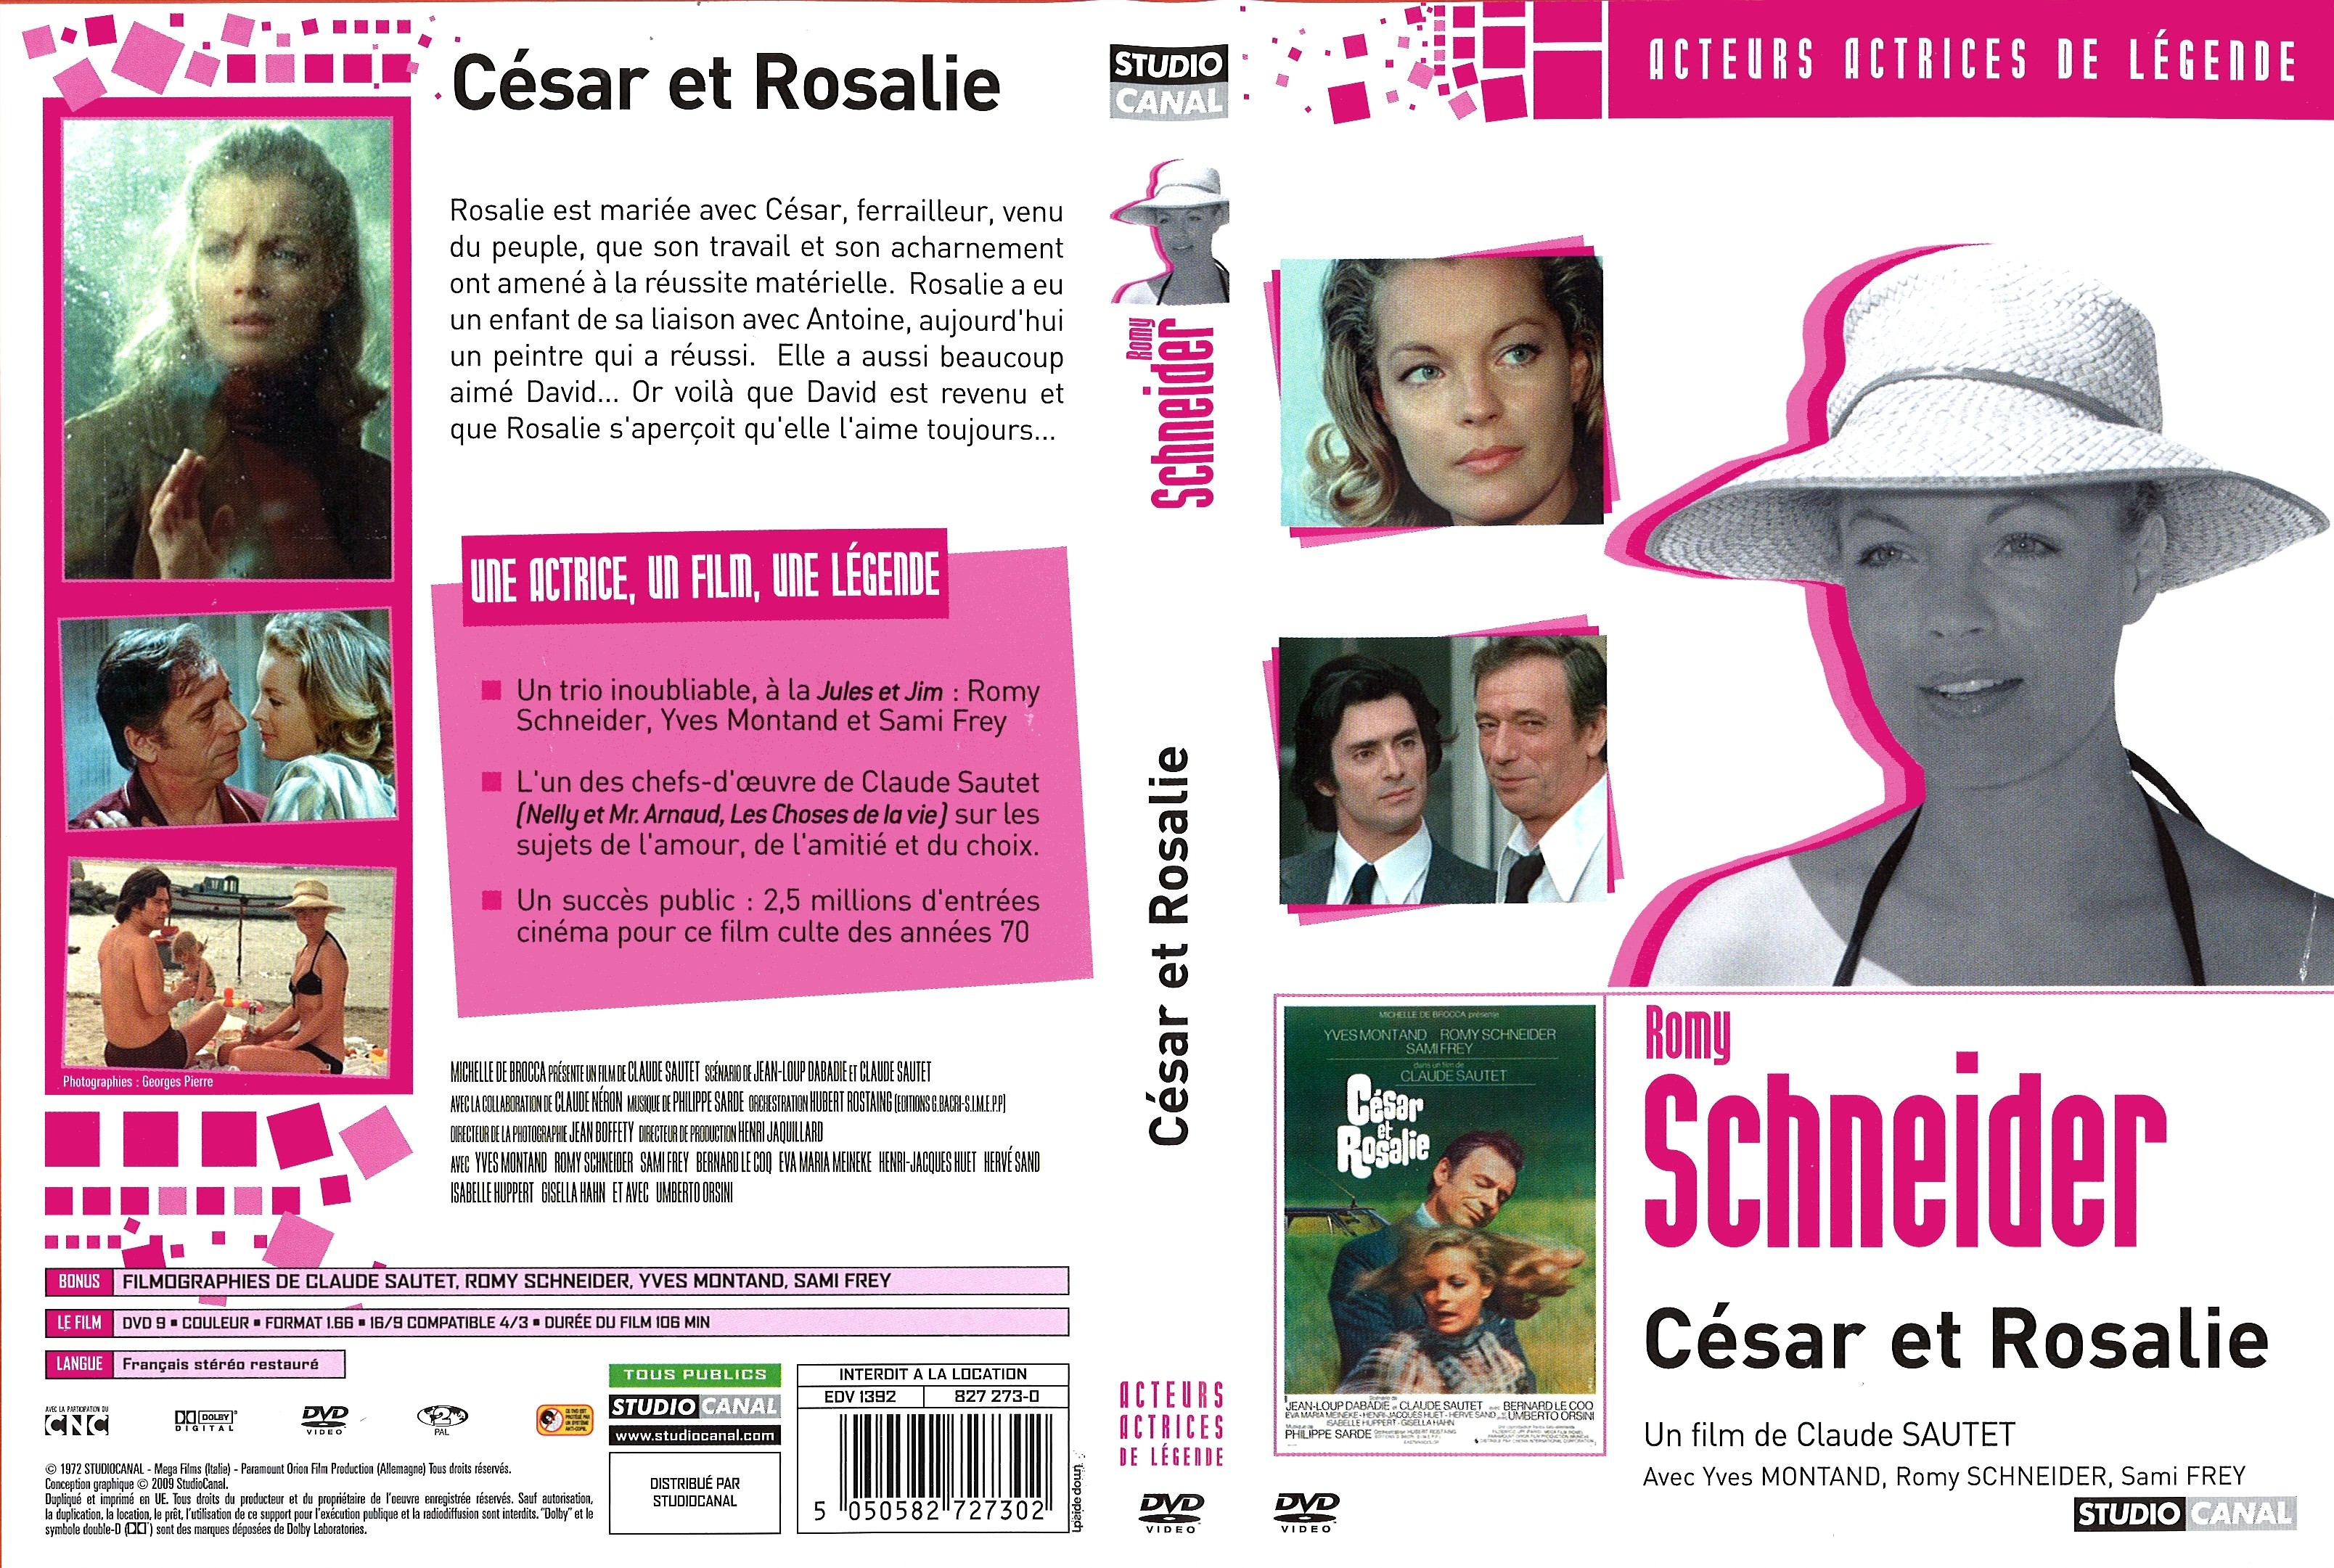 Jaquette DVD Csar et Rosalie v3